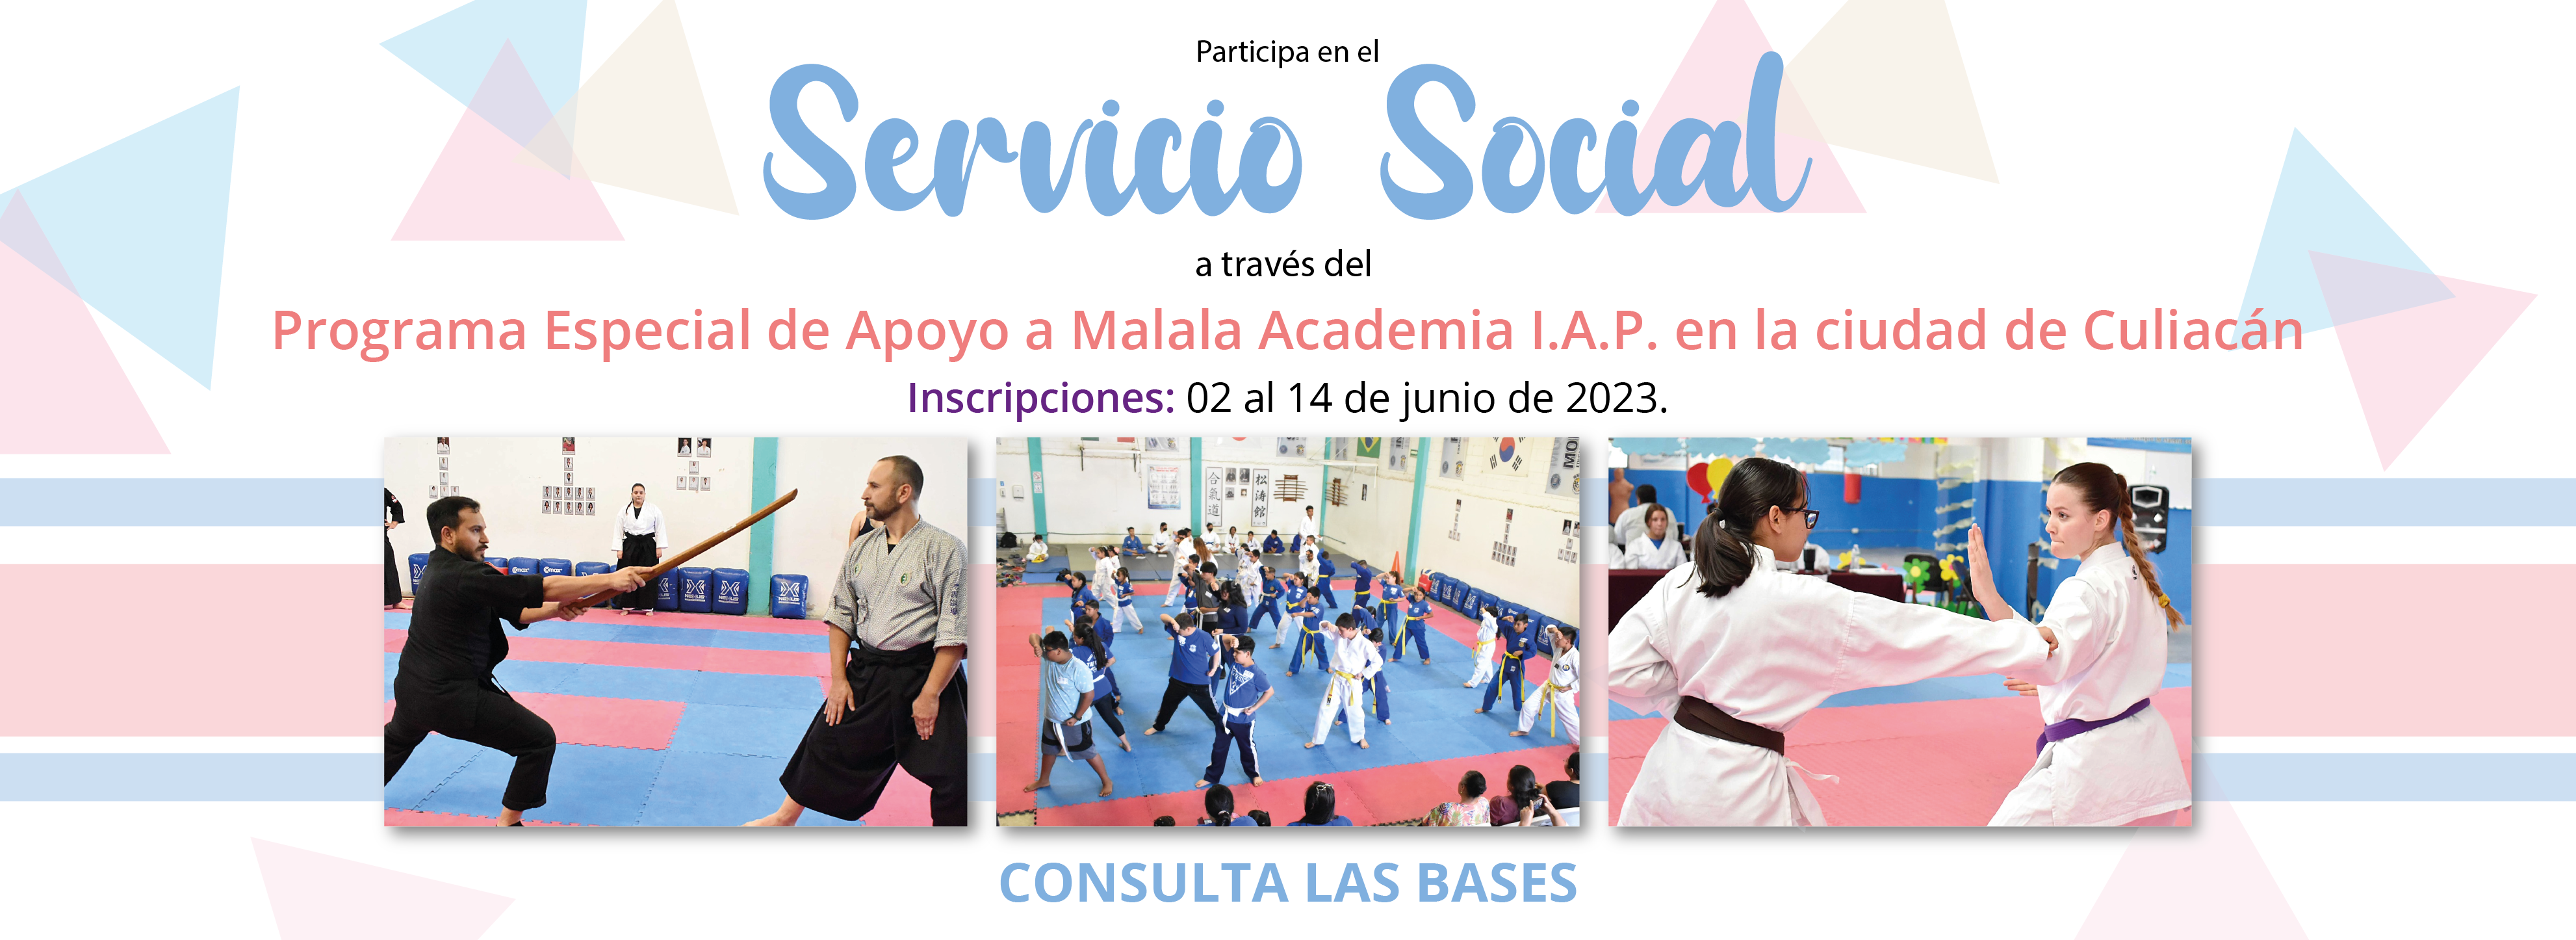 convocatoria_Servicio_Social_junio_Malala_Academia_2023_banner_web